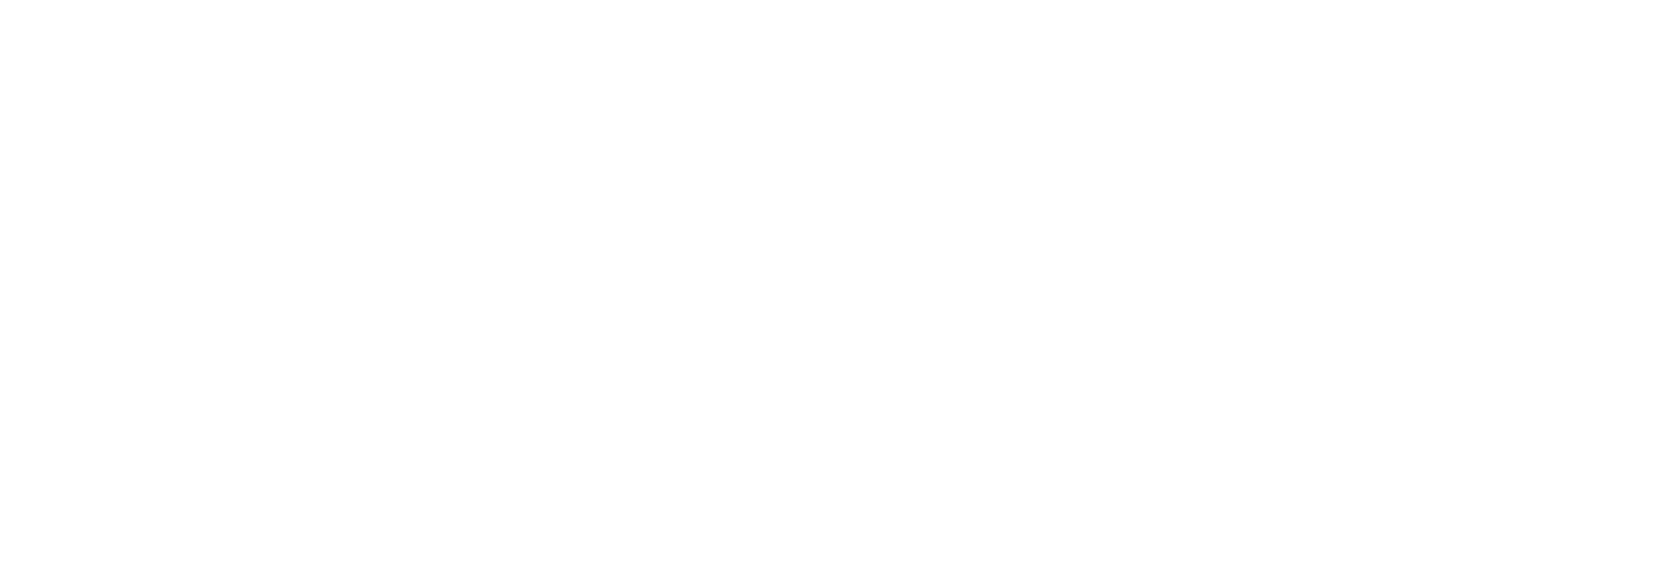 Authority Amplifier branding image